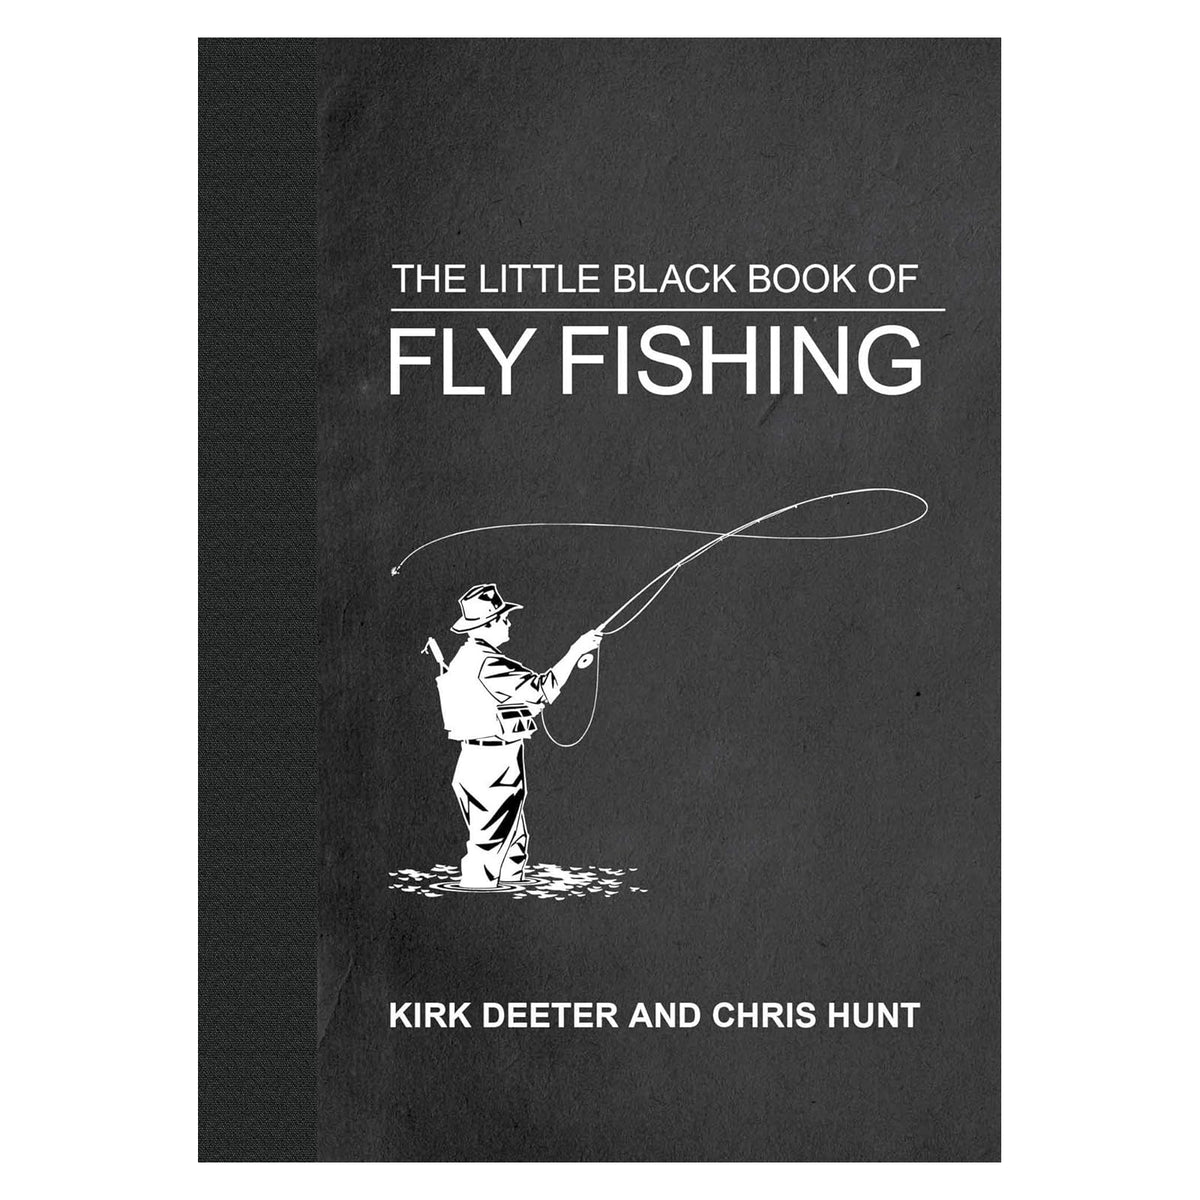 Nymph Fishing: terry-lawton: 9781904057659: : Books